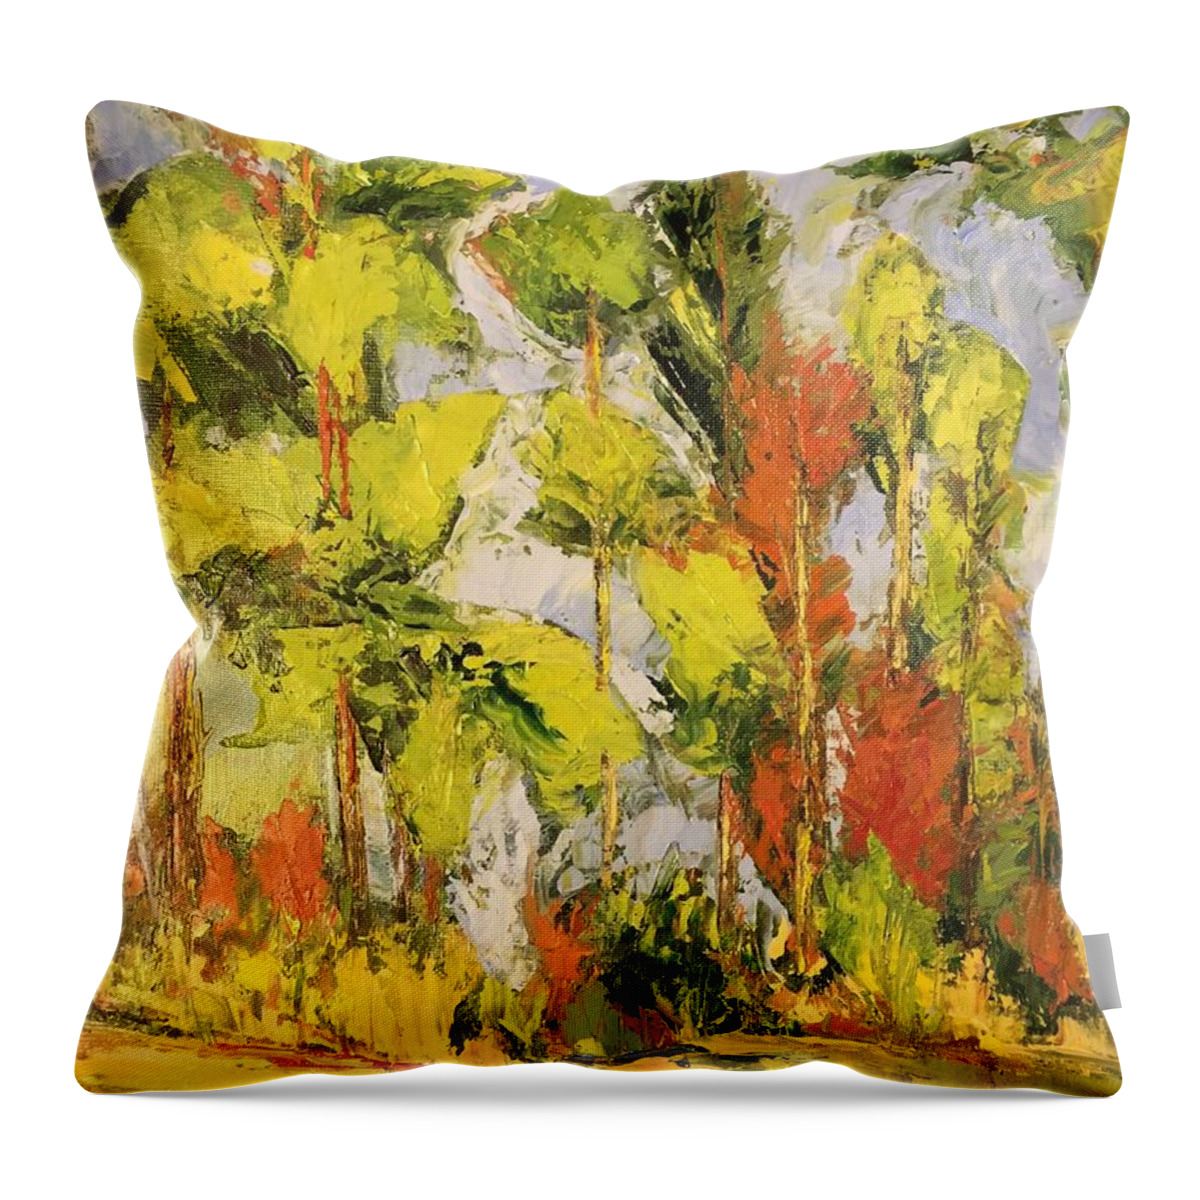 Landscape Throw Pillow featuring the painting Cezanne's Trees by Celeste Drewien